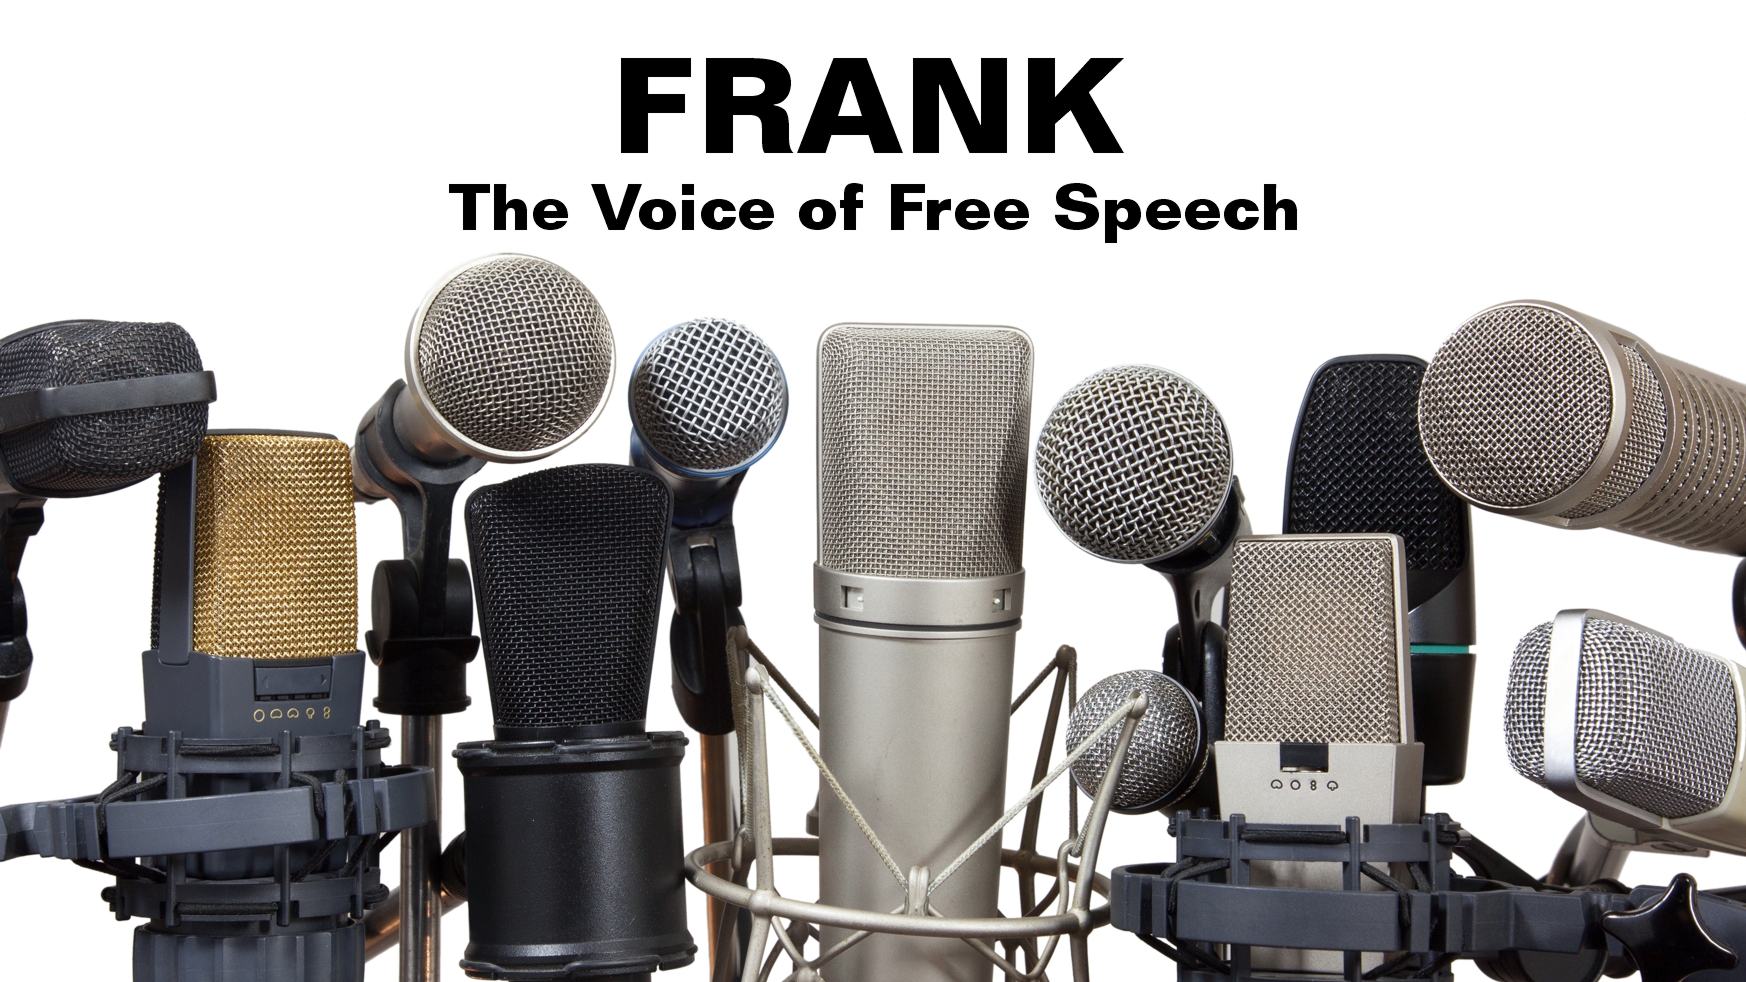 FRANK: The Voice of Free Speech